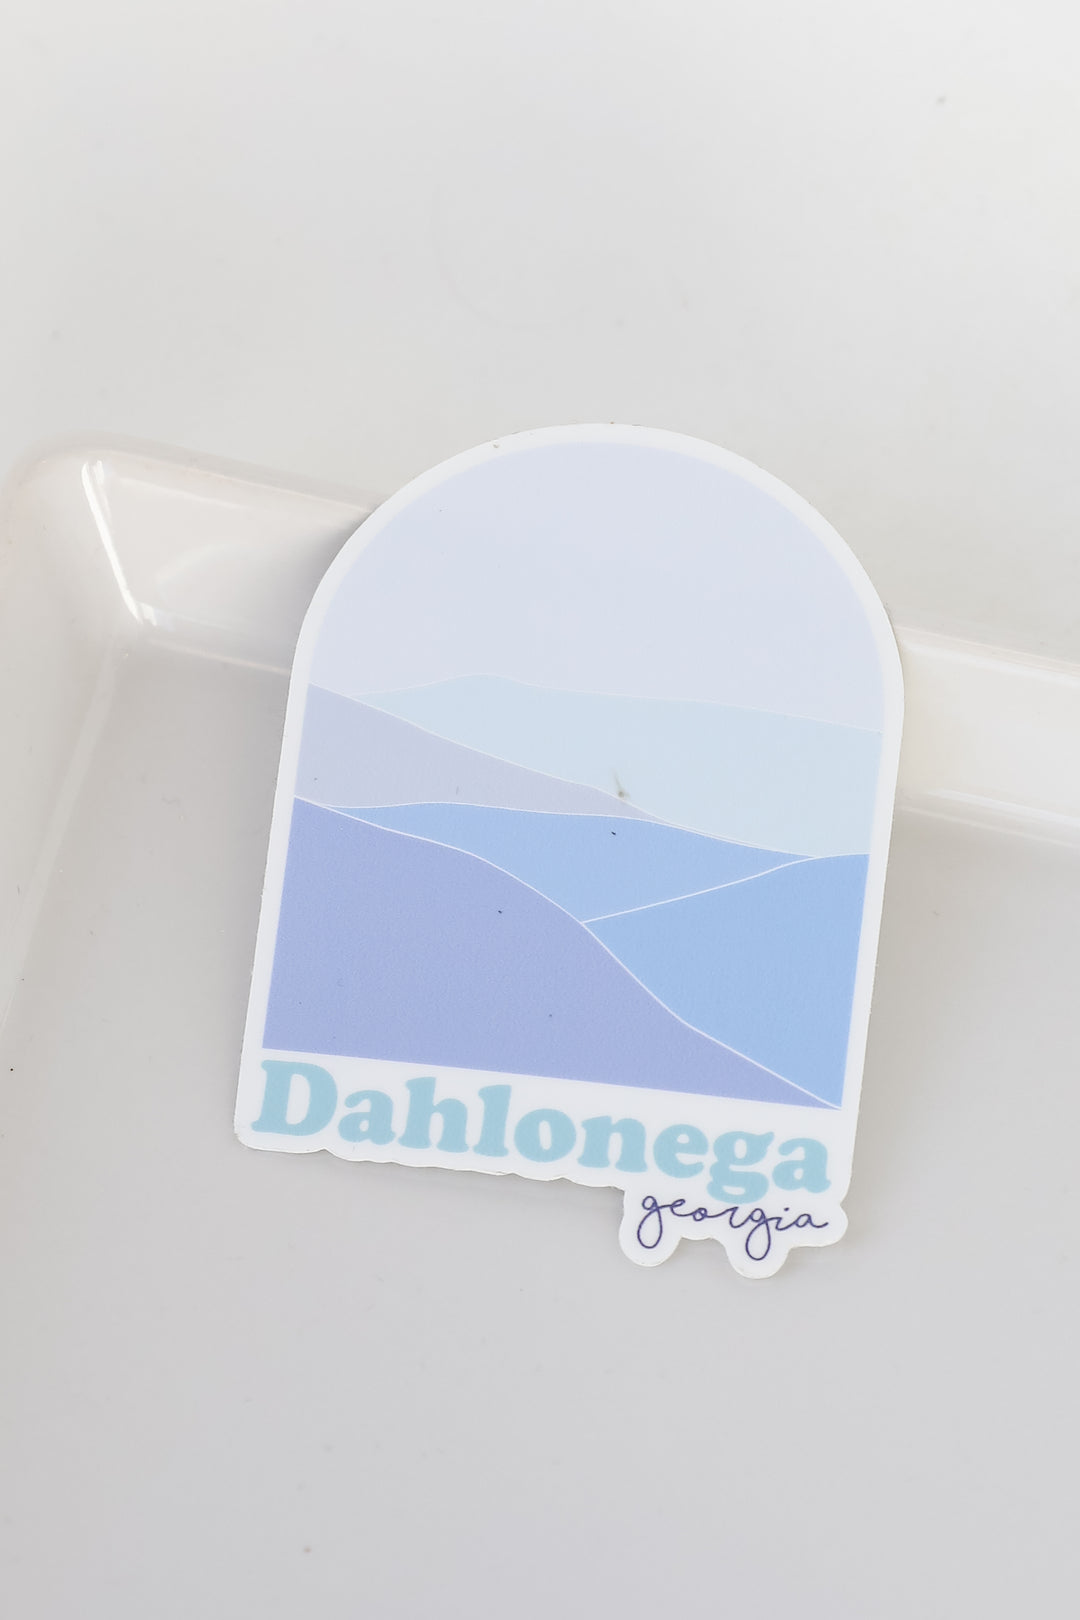 Round Dahlonega Georgia Mountain Sticker in blue